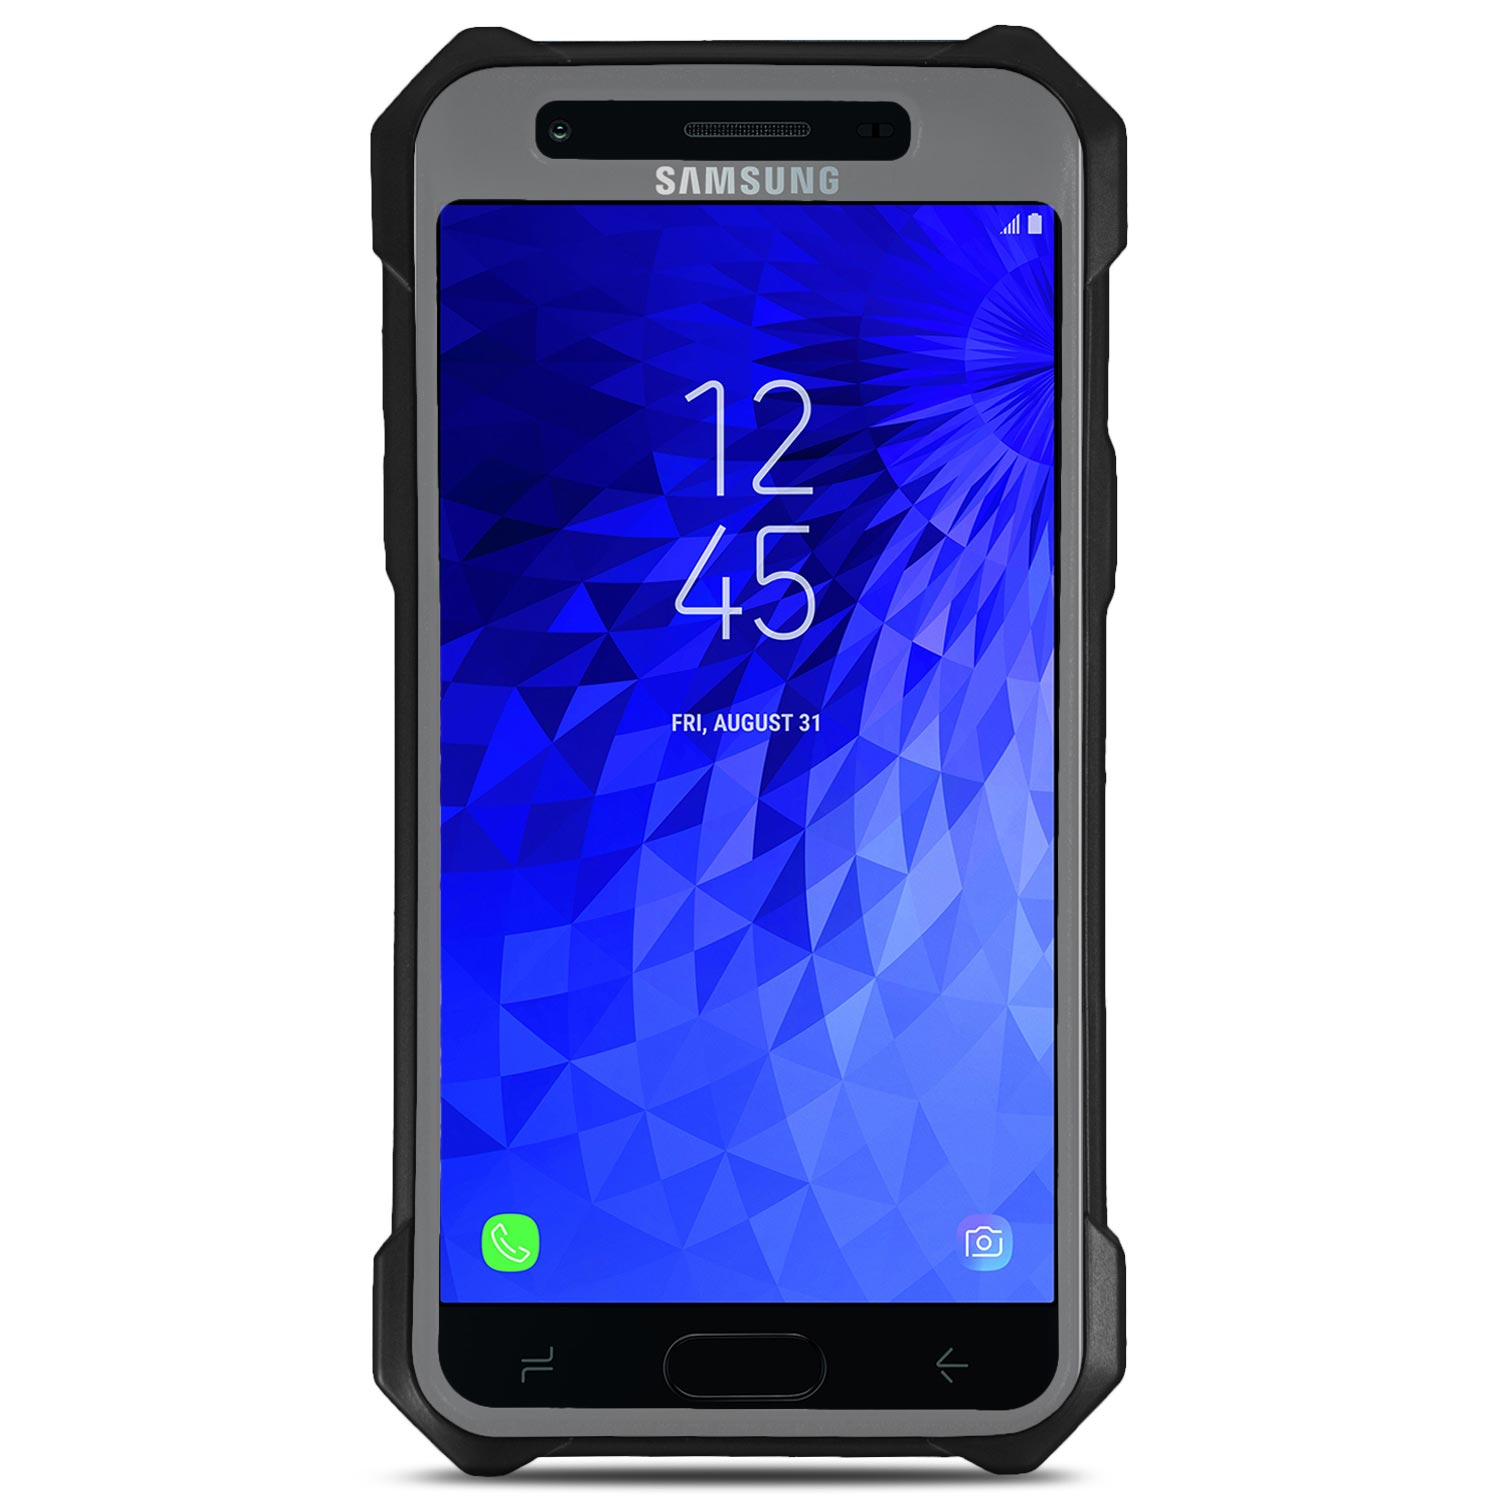 Samsung Galaxy J3 2018 / Express Prime 3 / J3 Star / J3 Prime 2 / Amp Prime 3 / Eclipse 2 / J3 Aura / J3 Orbit / Achieve Case VitaCase Protective Full Body Heavy Duty Phone Cover